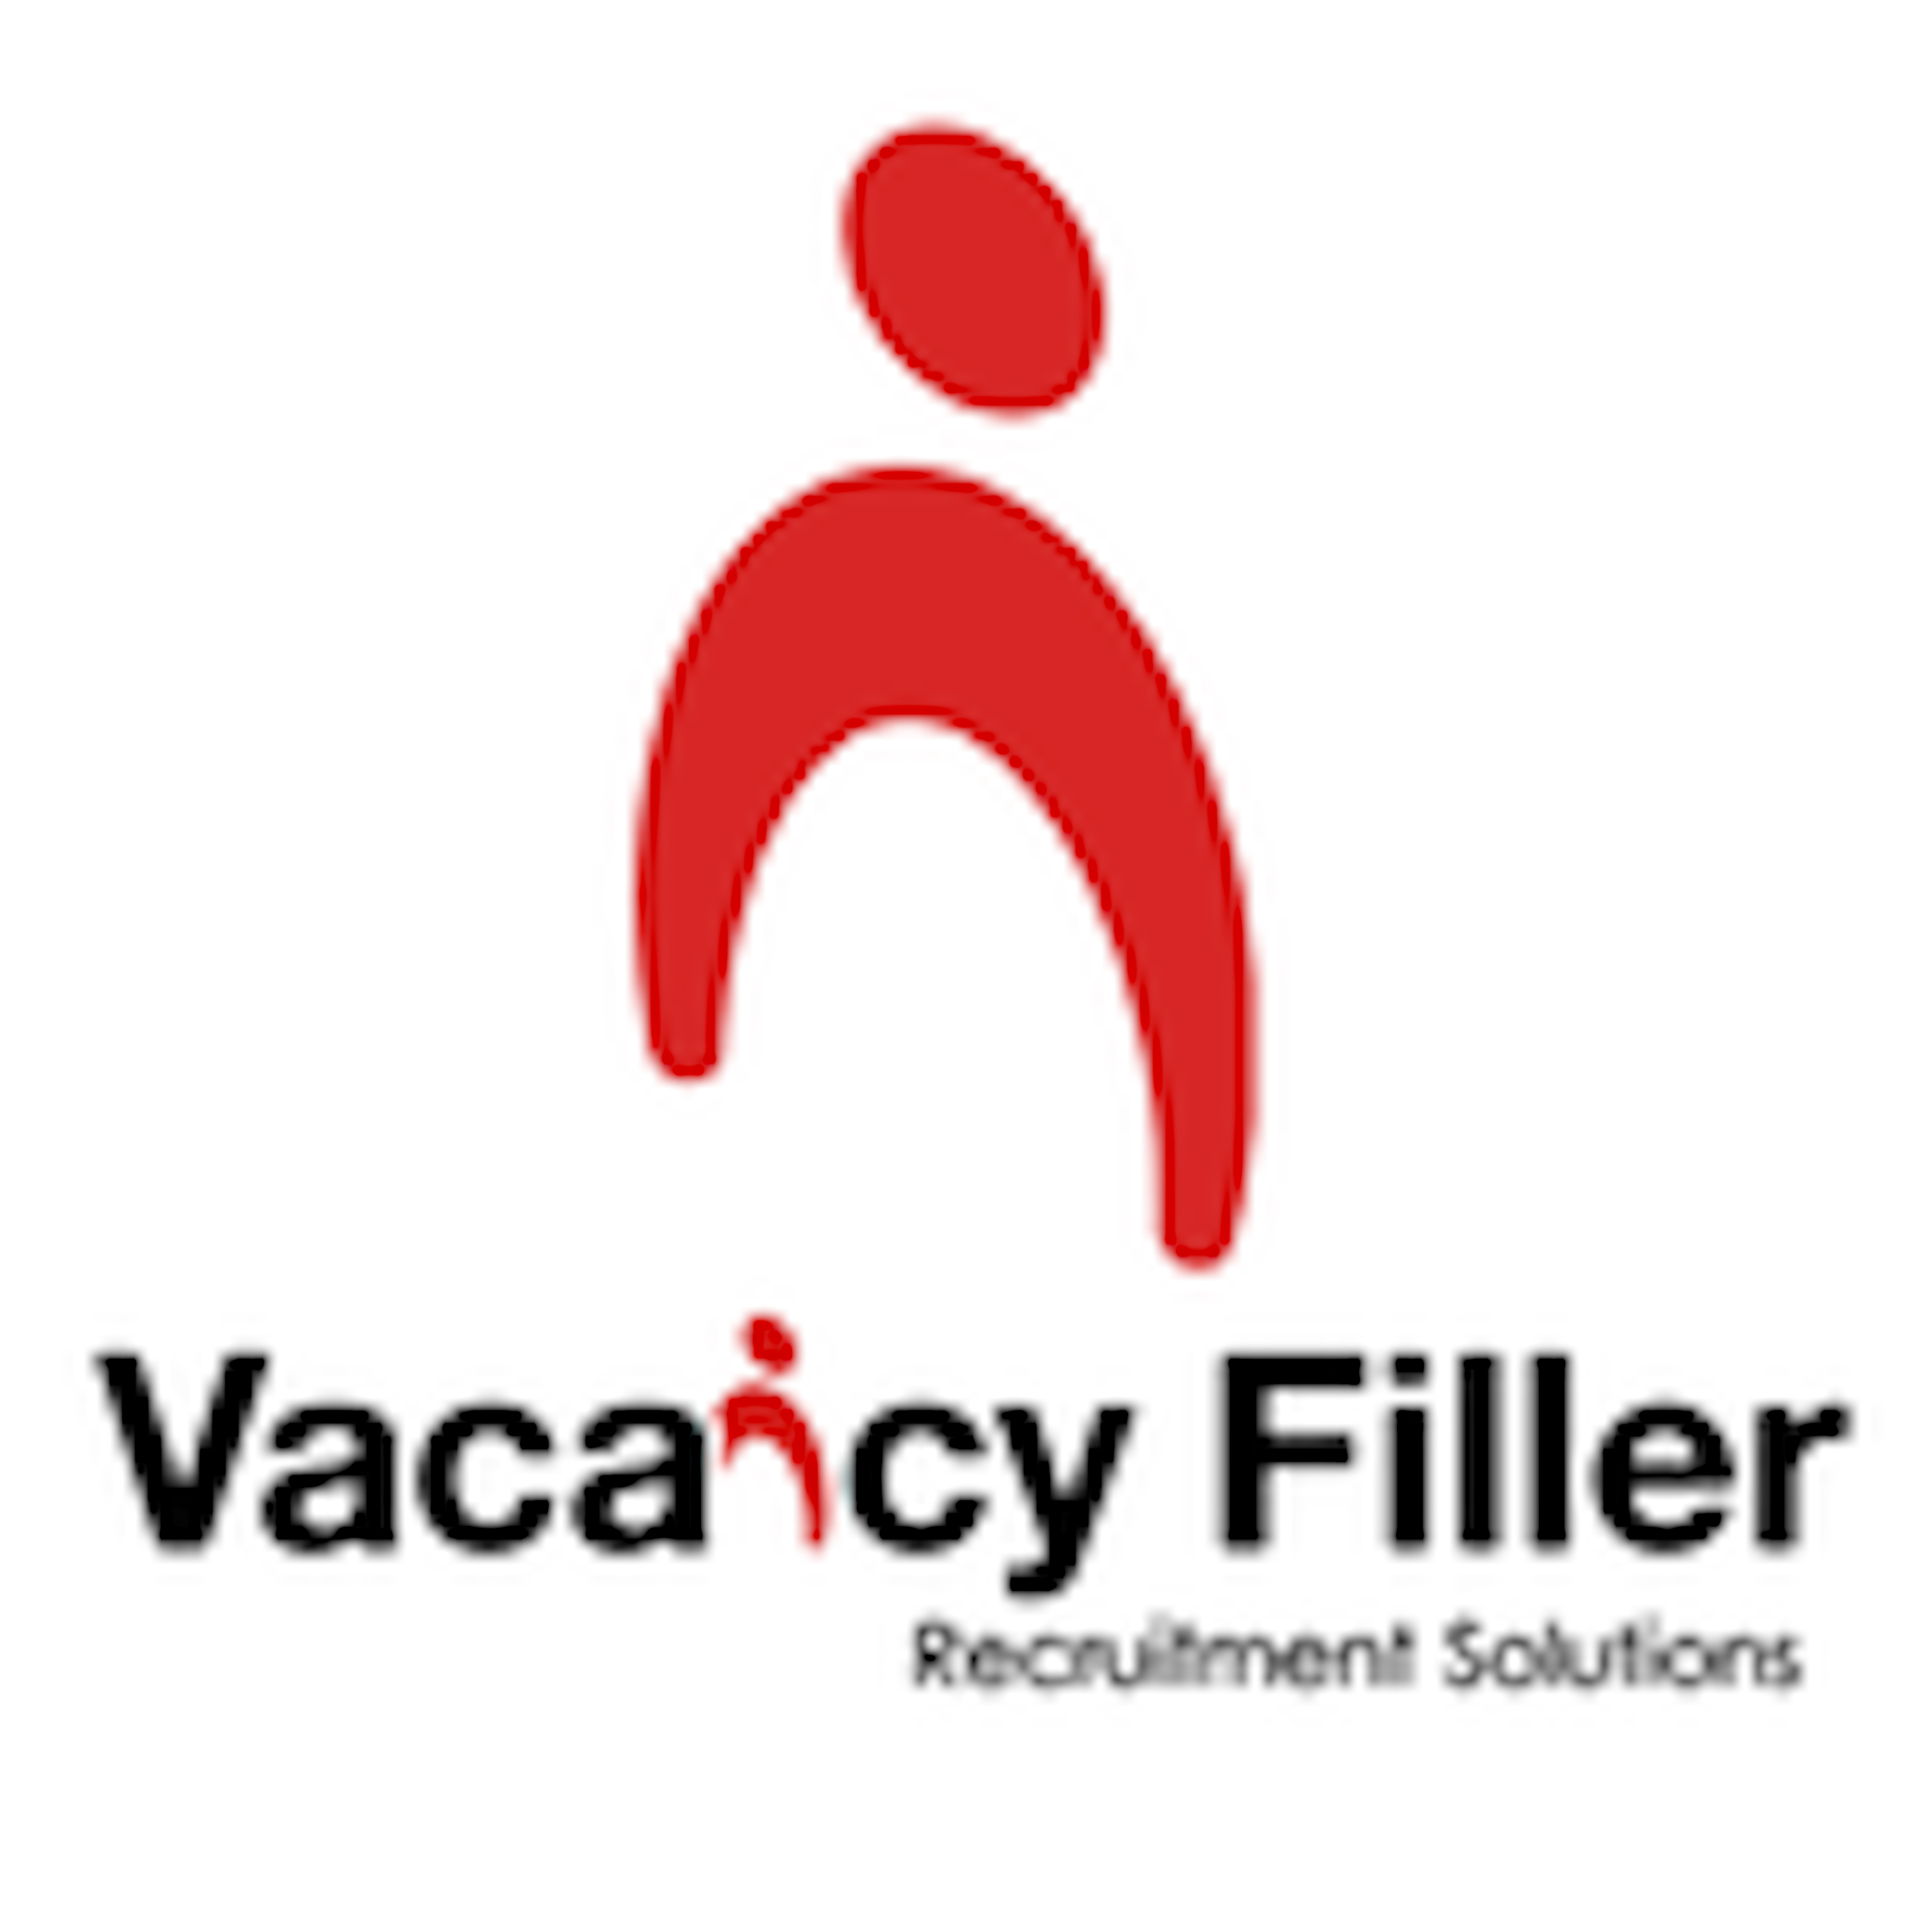 Vacancy Filler Logo